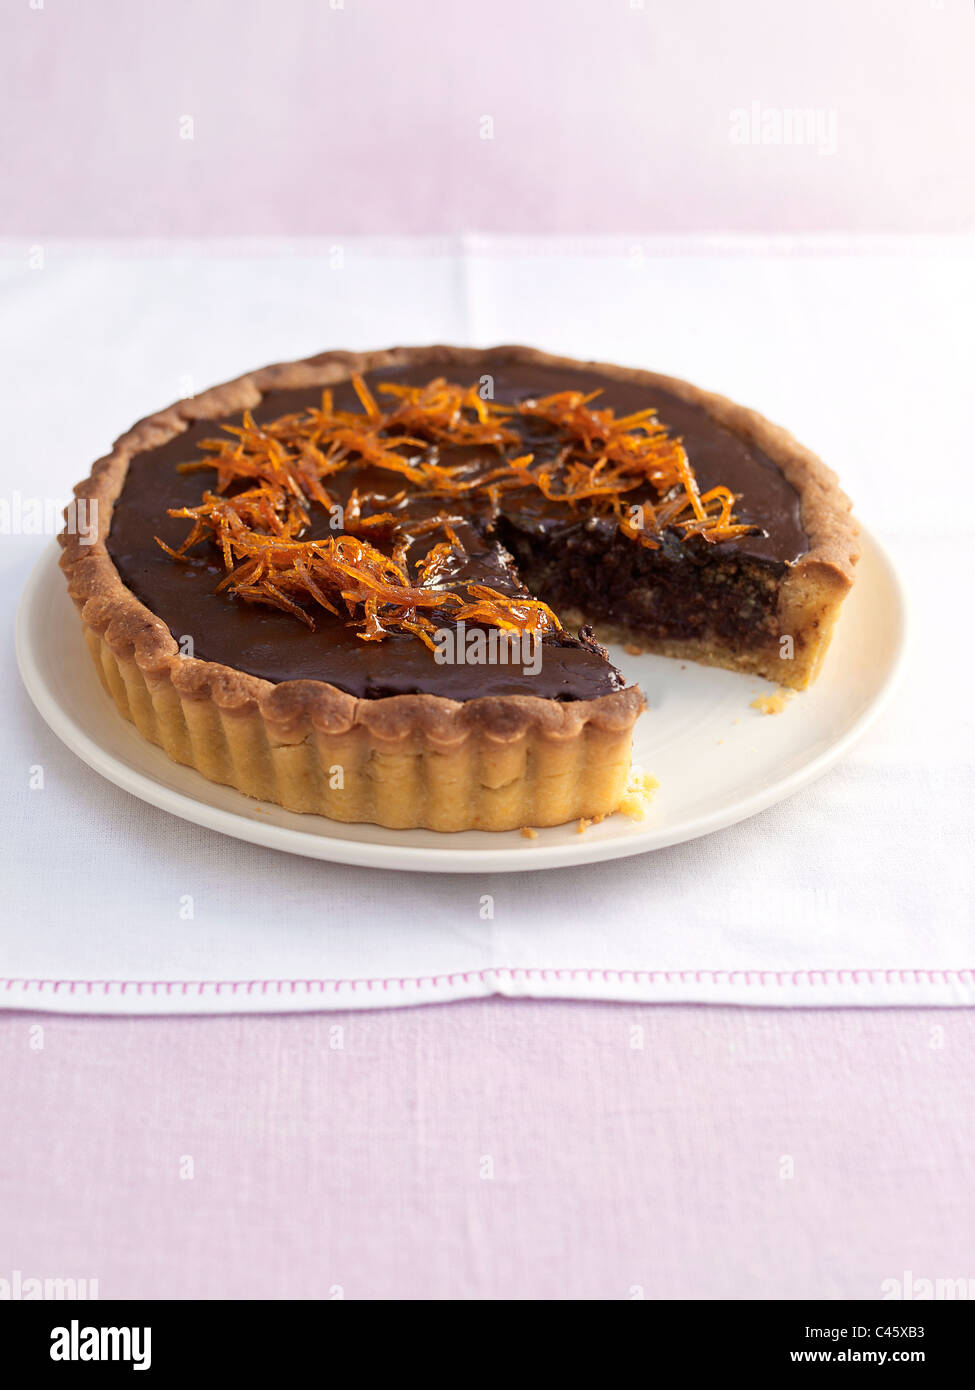 Nut-choc orange tart on plate, close-up Stock Photo